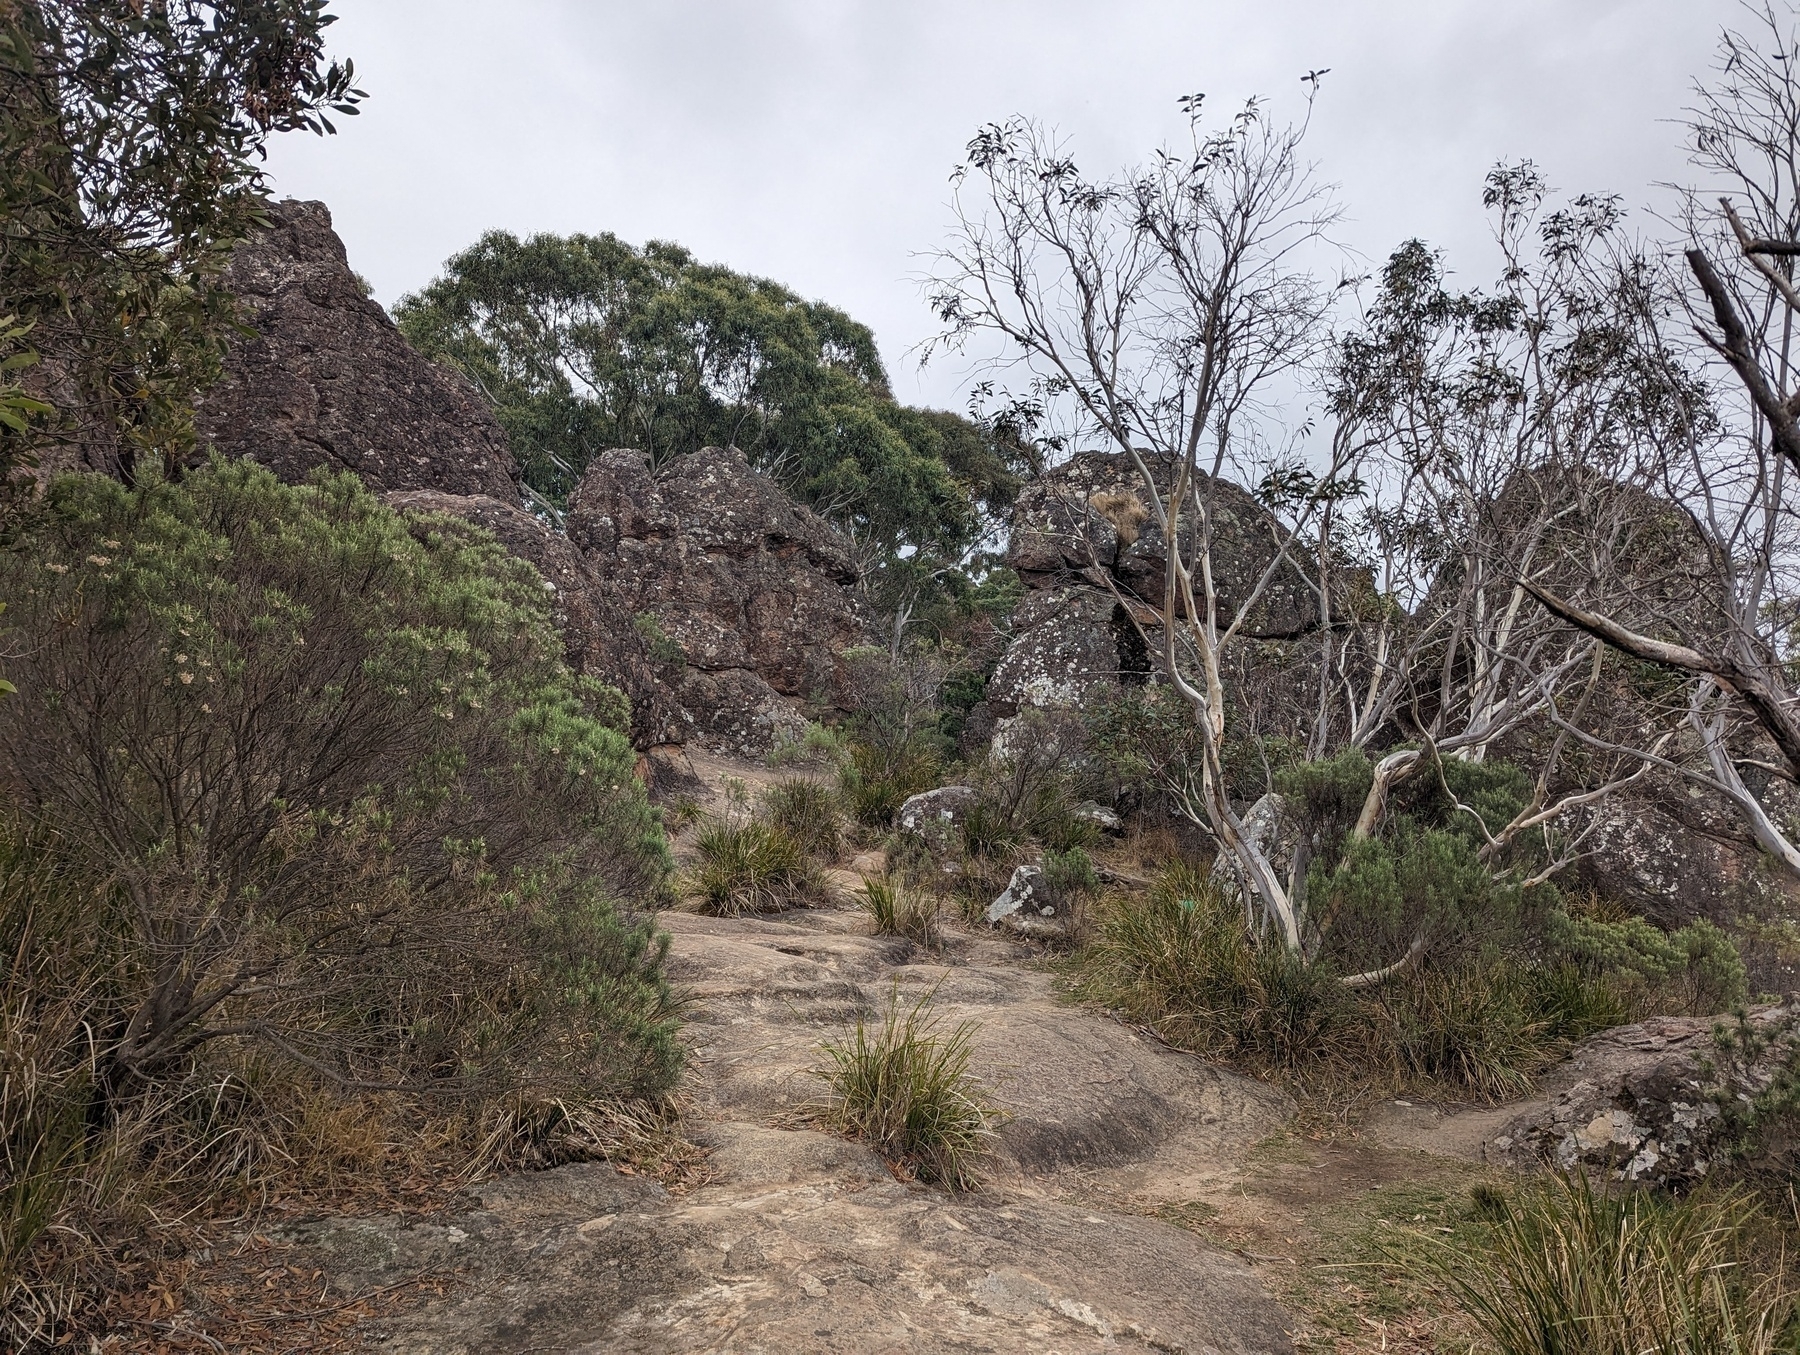 Australian landscape photo of rocks and native plants under a cloudy sky.